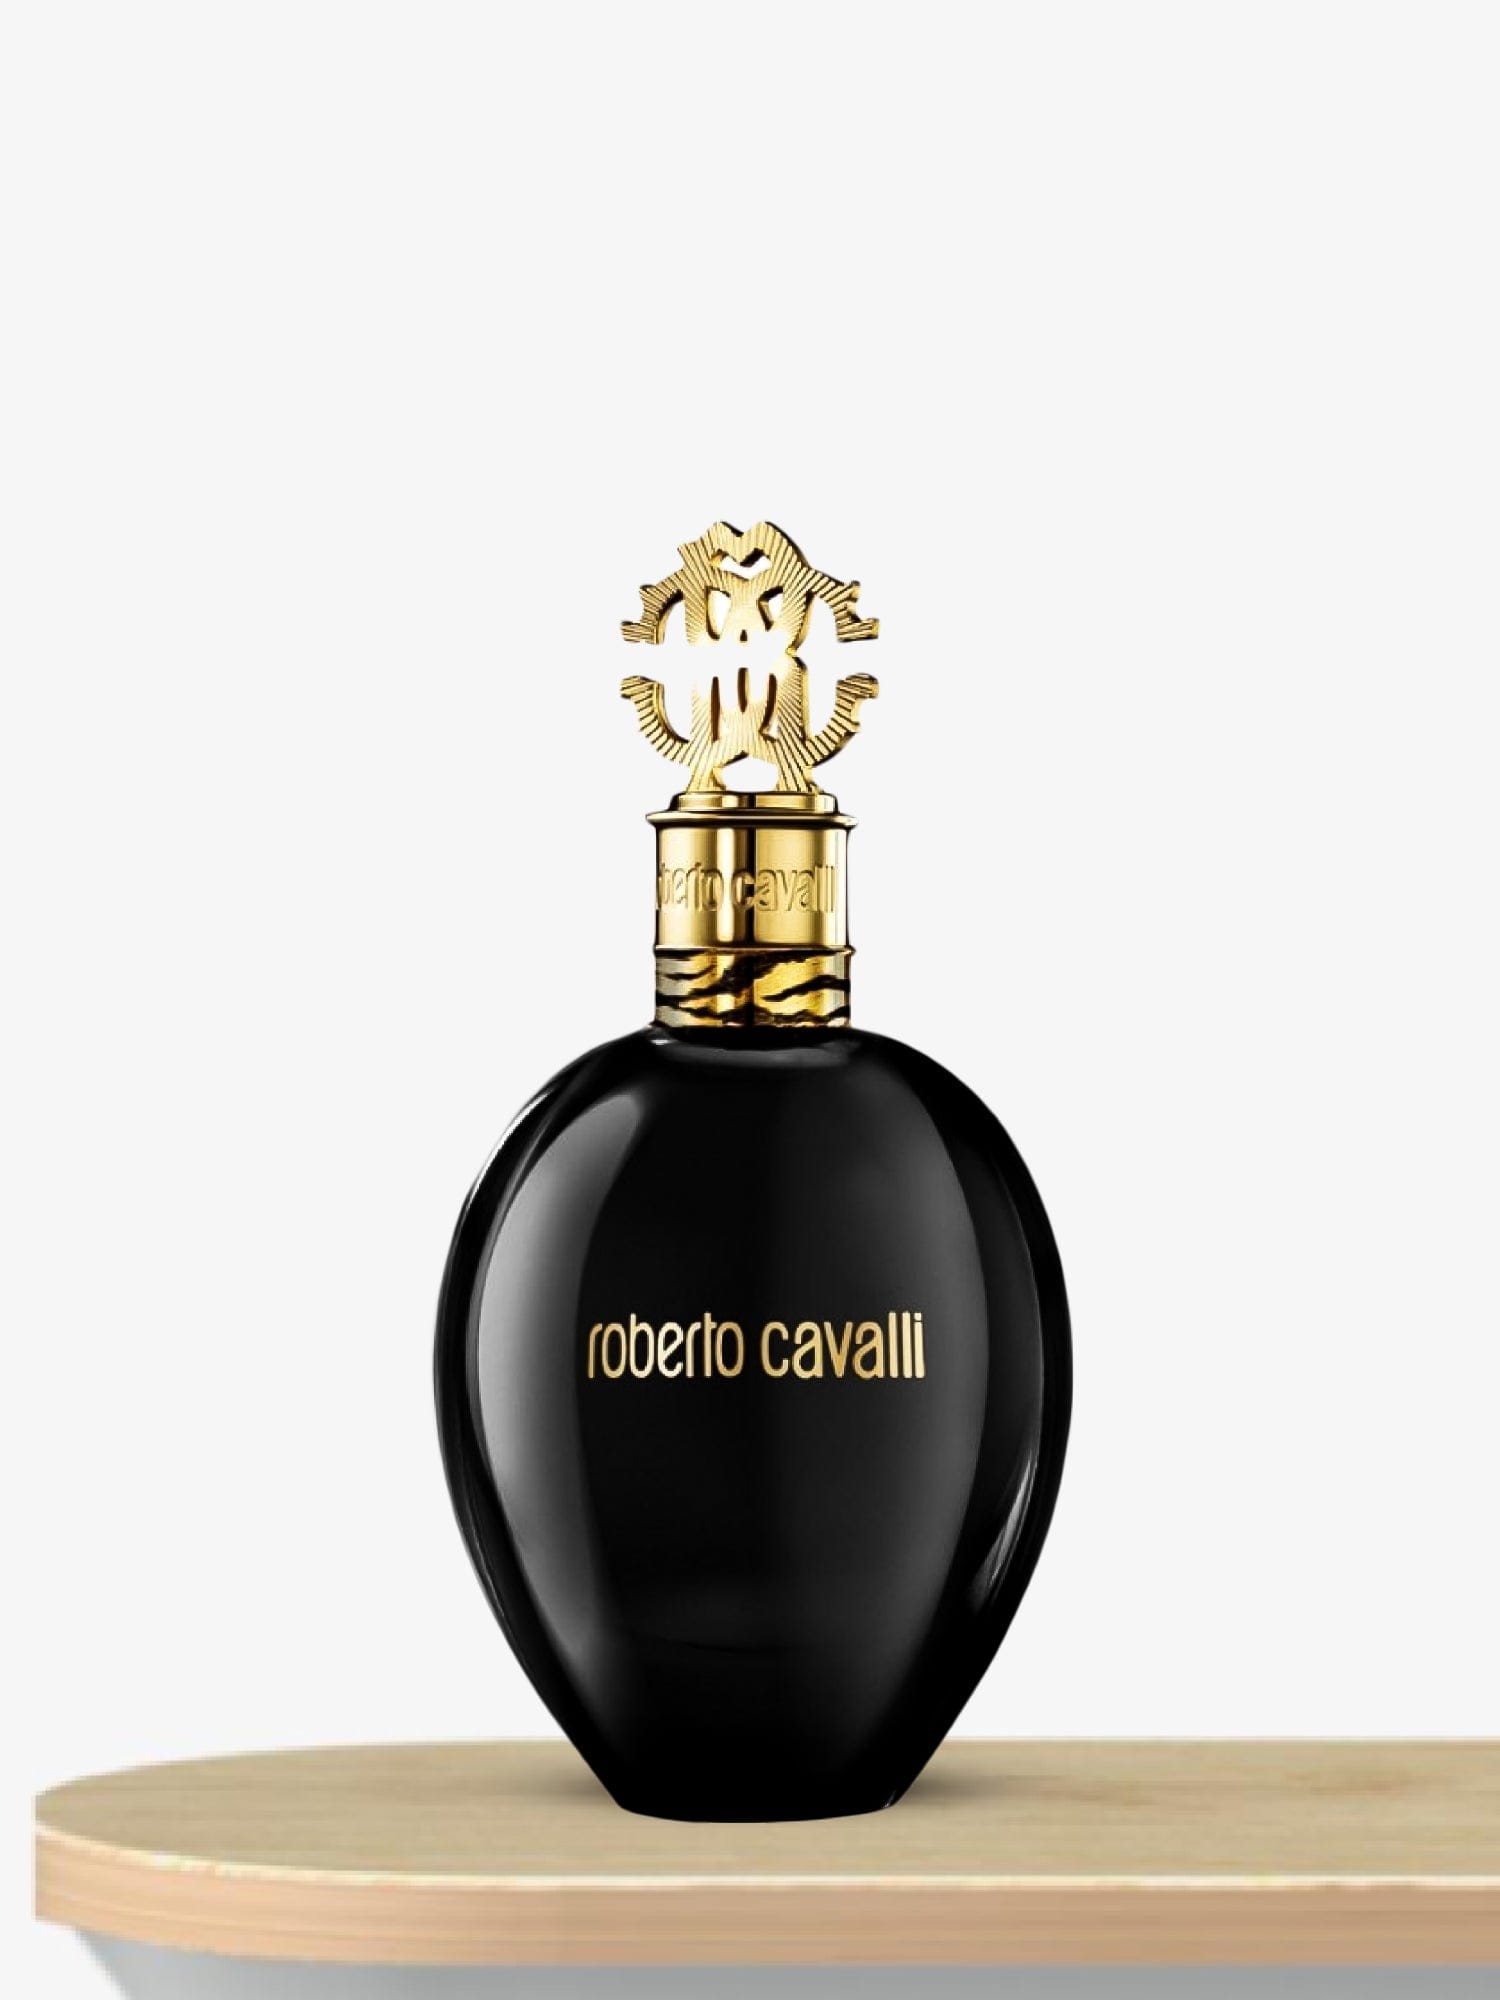 Roberto Cavalli Nero Assoluto Eau de Parfum 75 mL / Female